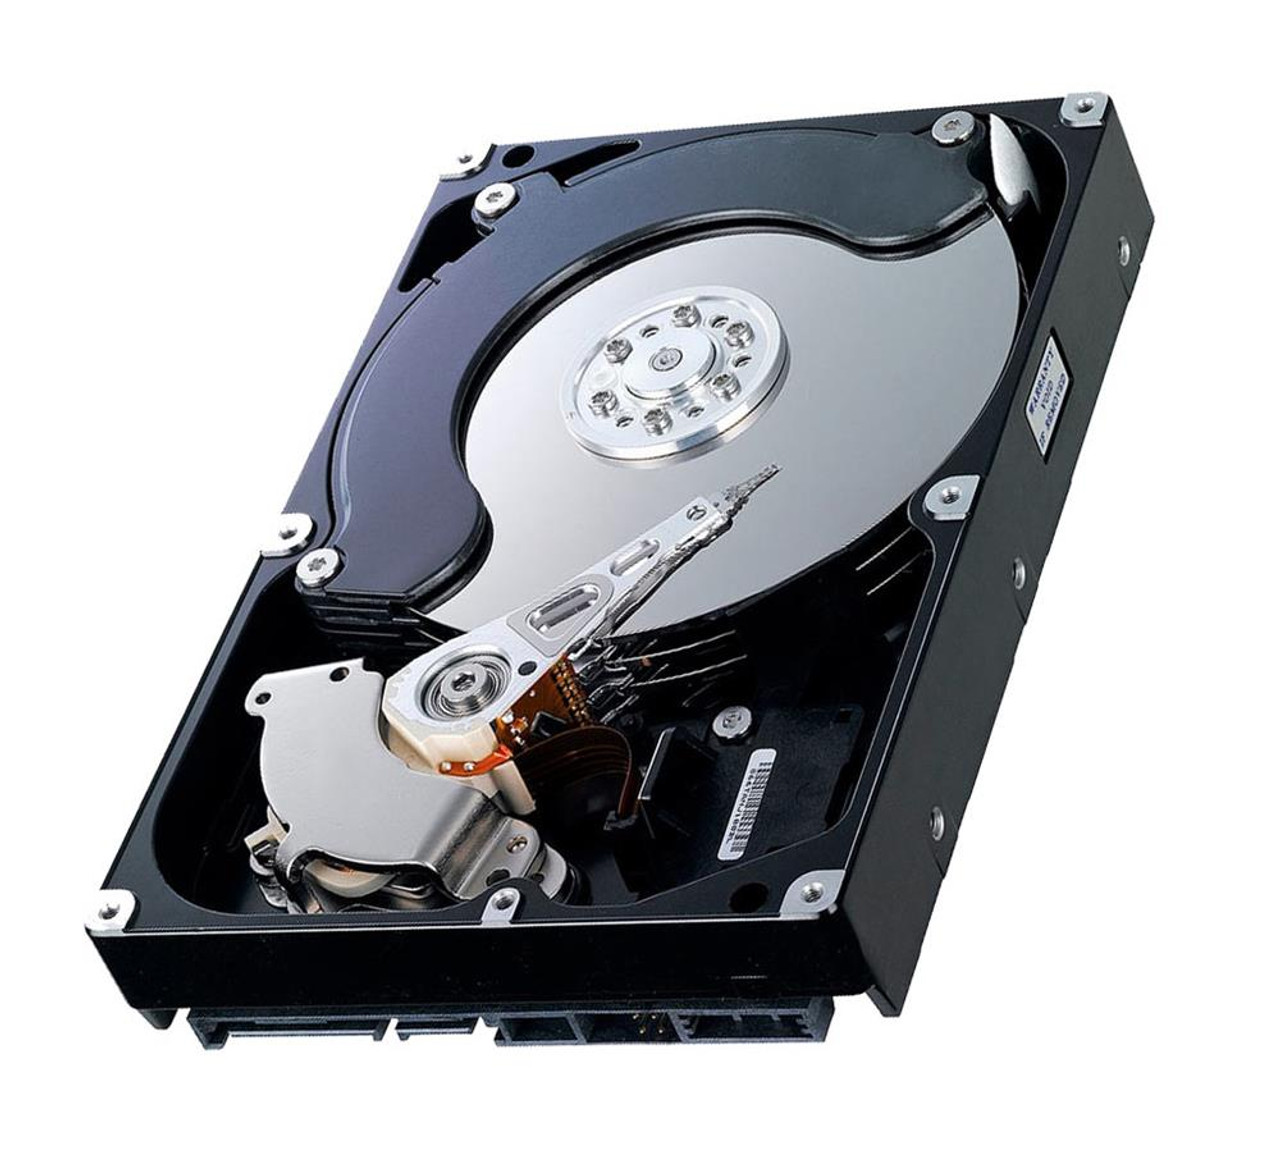 AC11000 - Western Digital Caviar 1.05GB 5200RPM ATA/IDE 128KB Cache 3.5-inch Hard Disk Drive